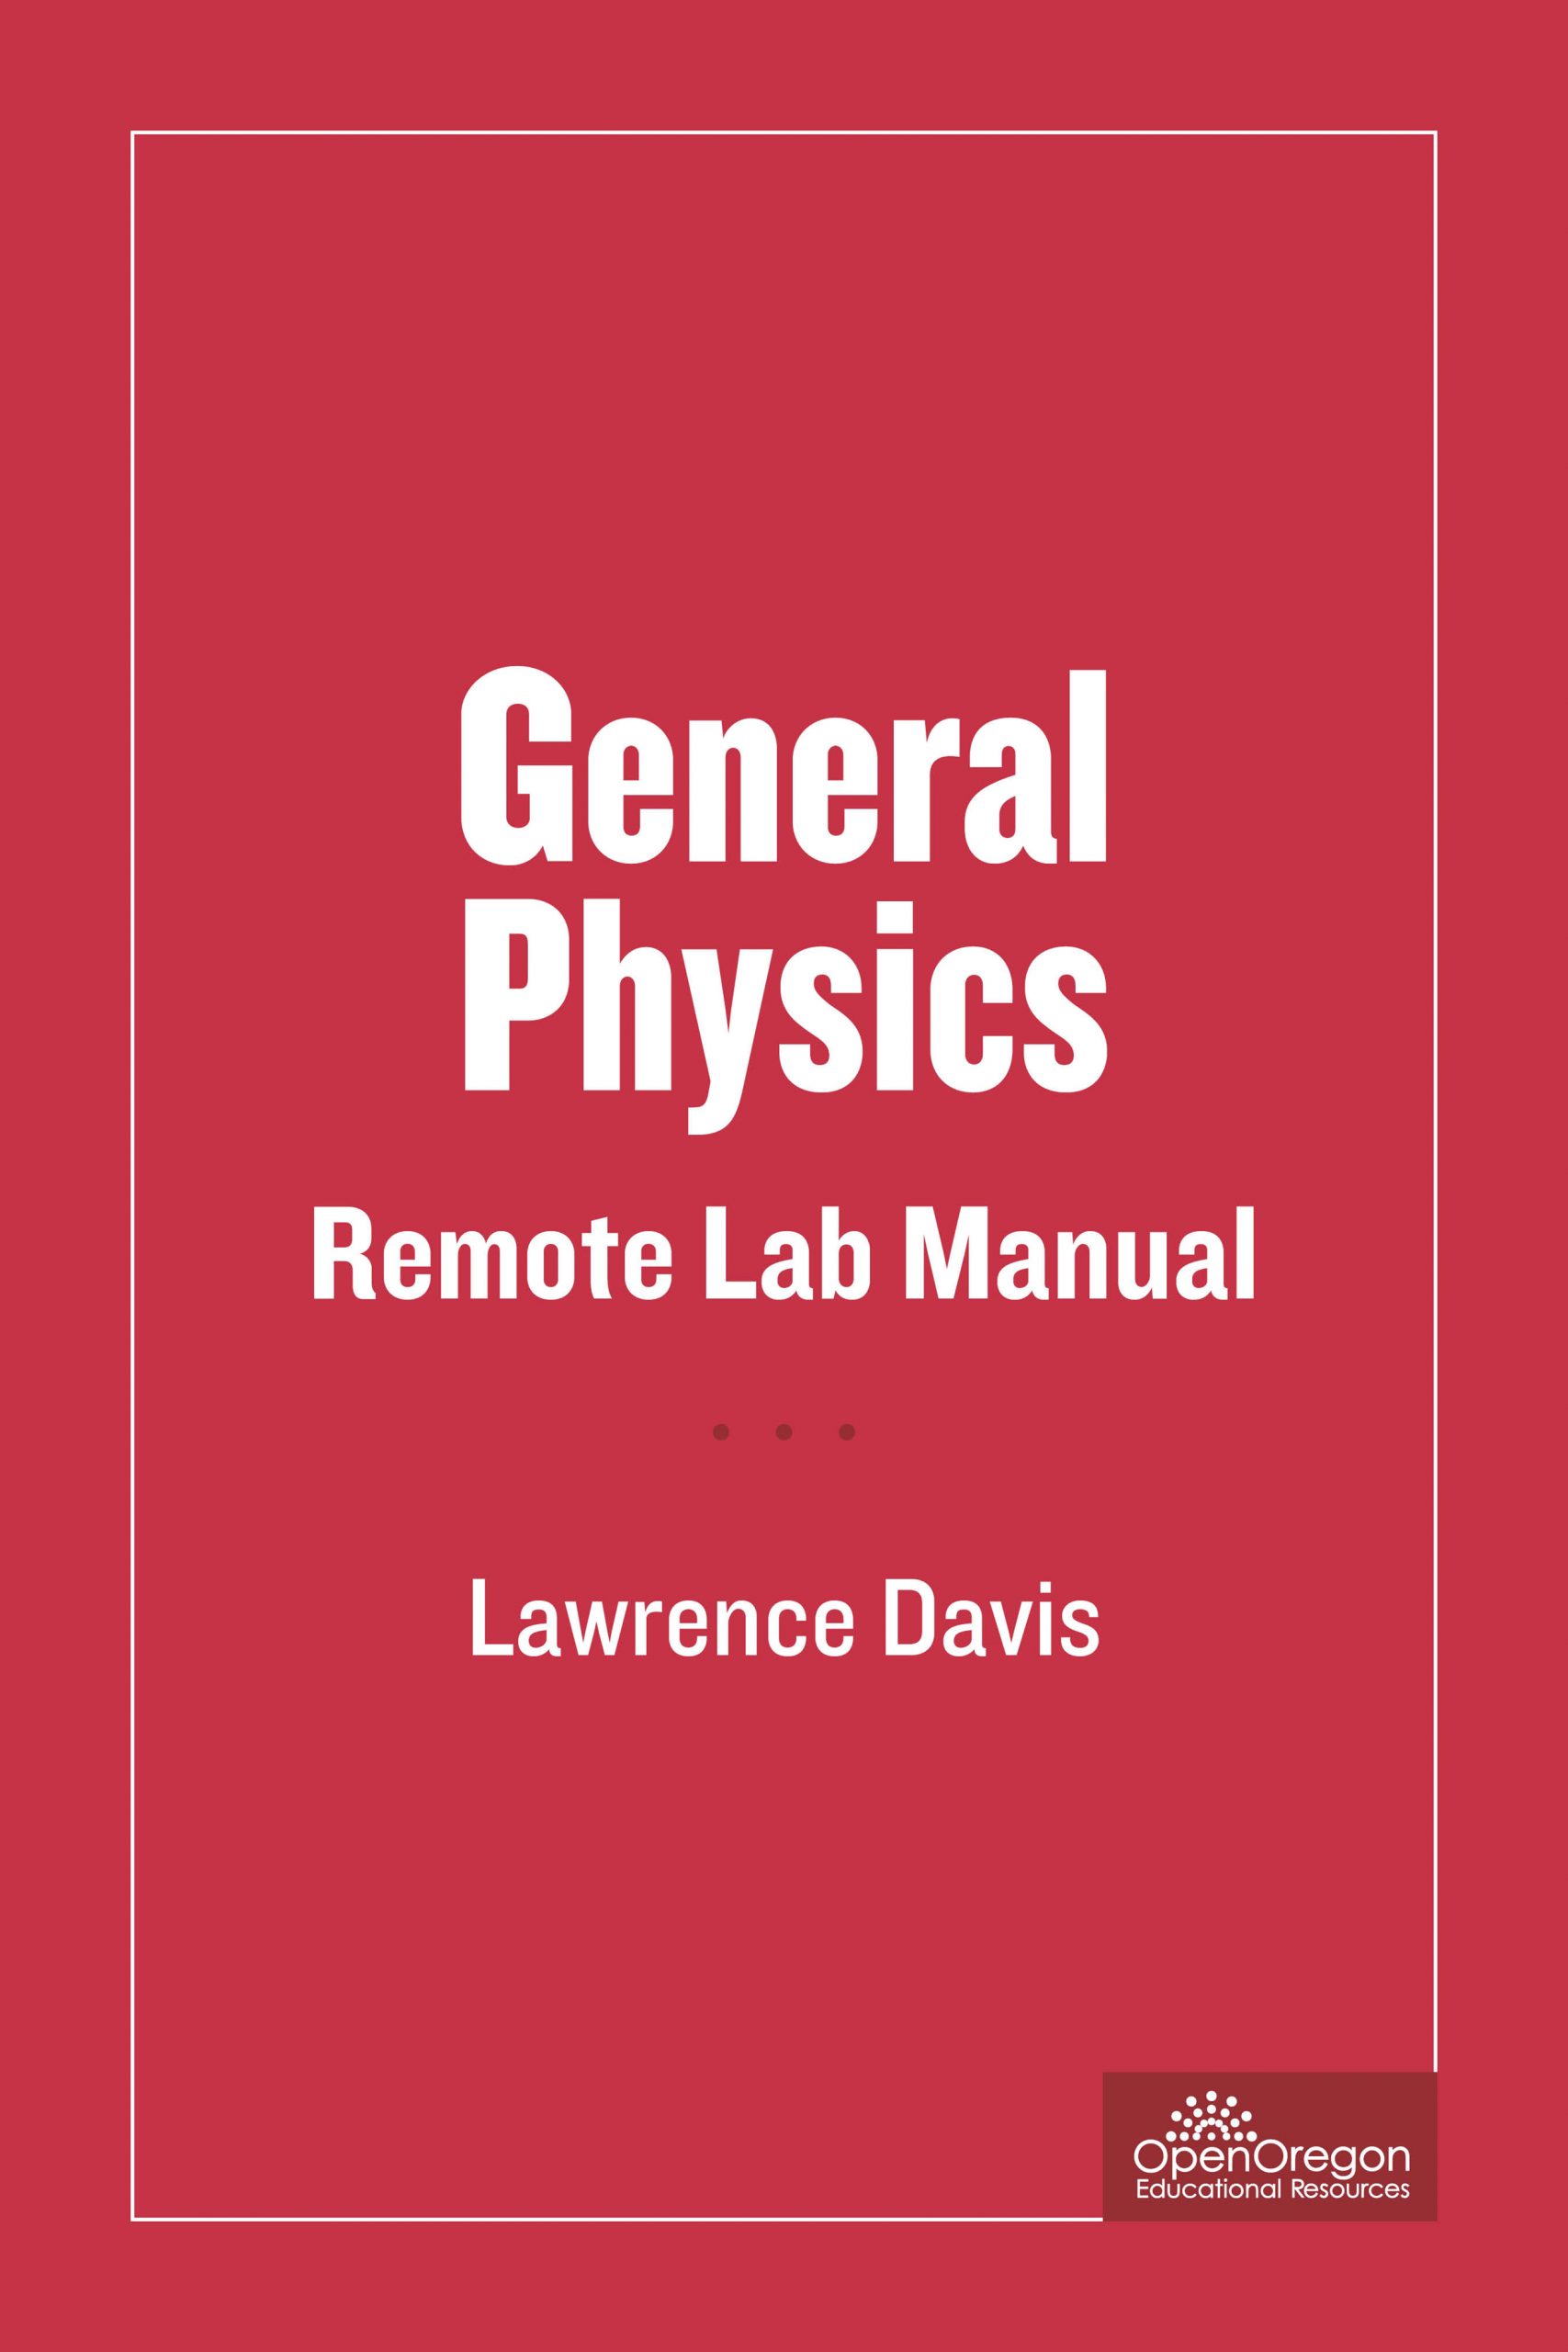 General Physics Remote Lab Manual